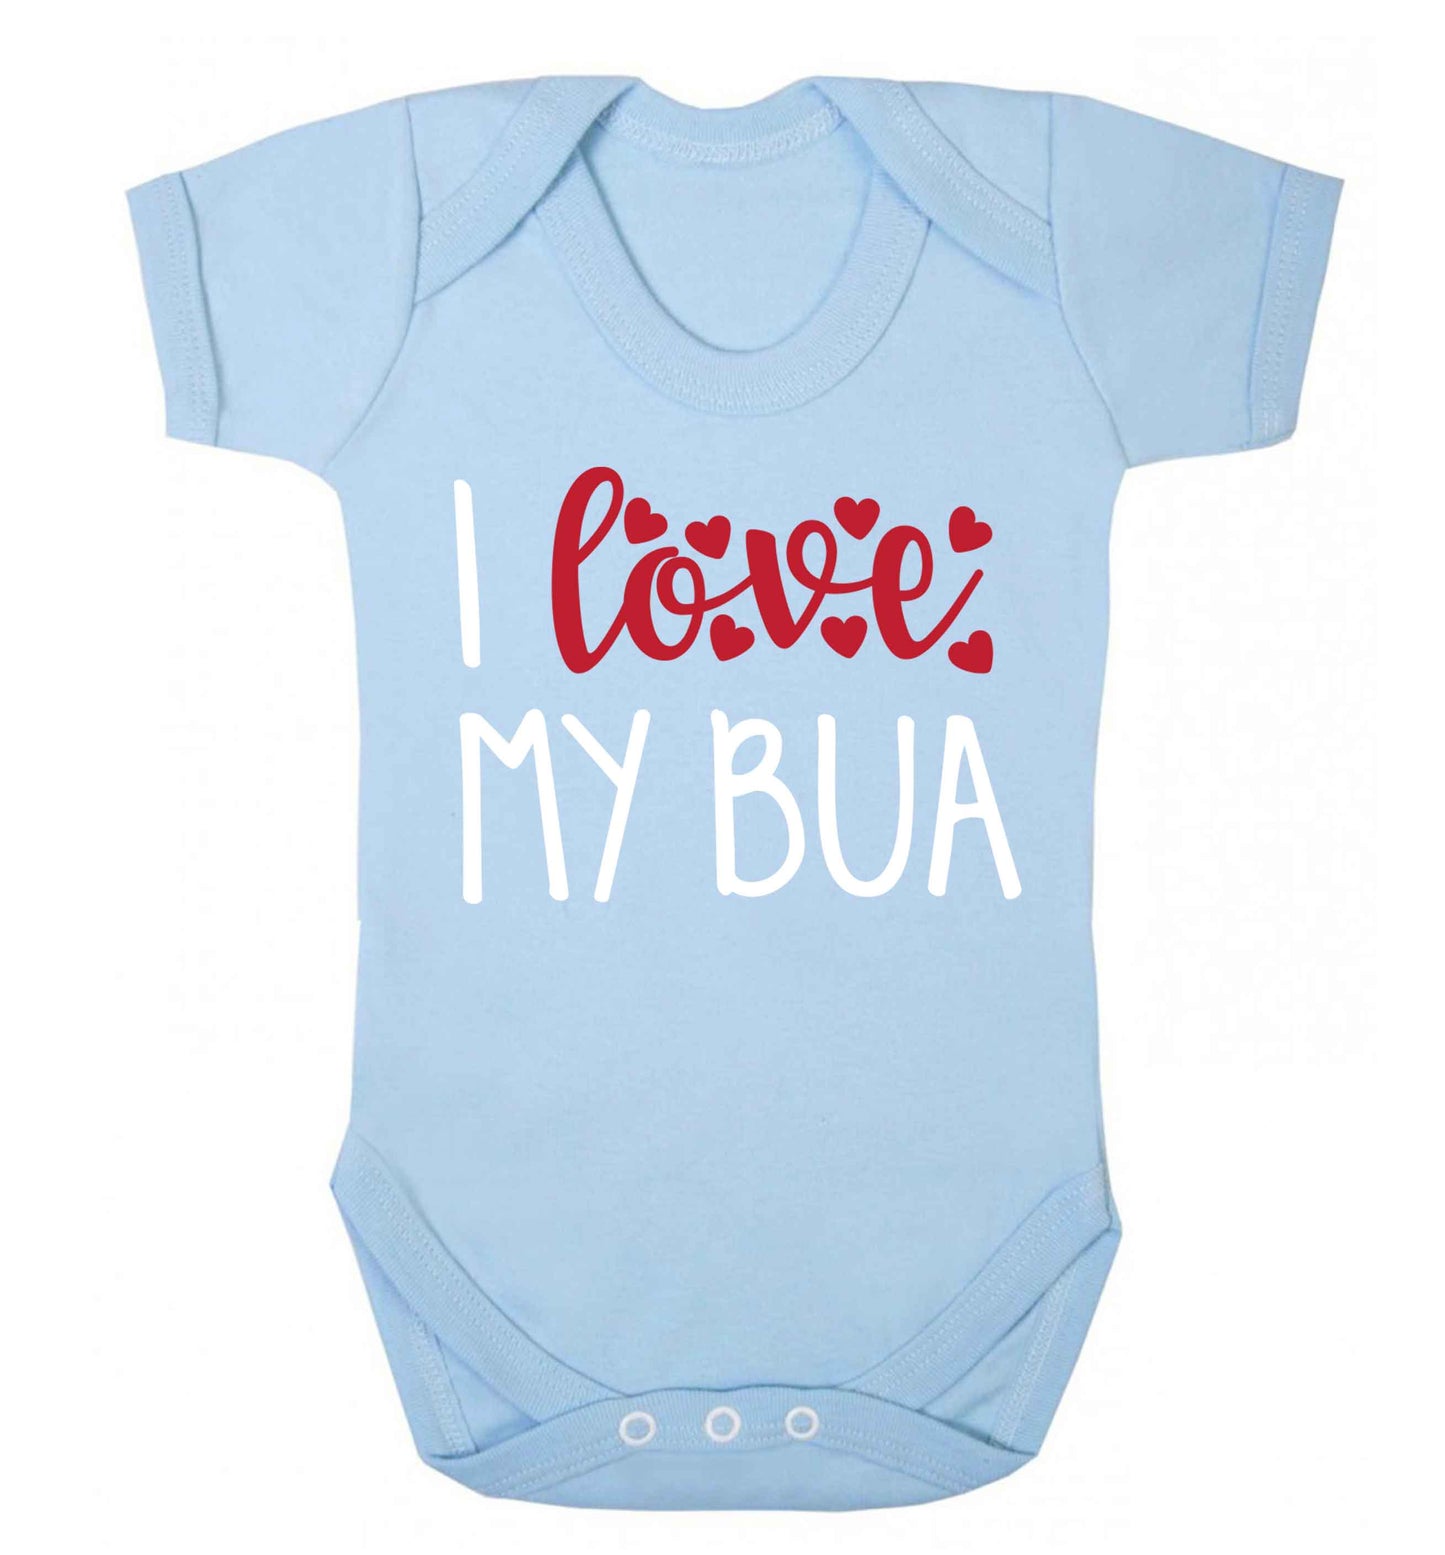 I love my bua Baby Vest pale blue 18-24 months